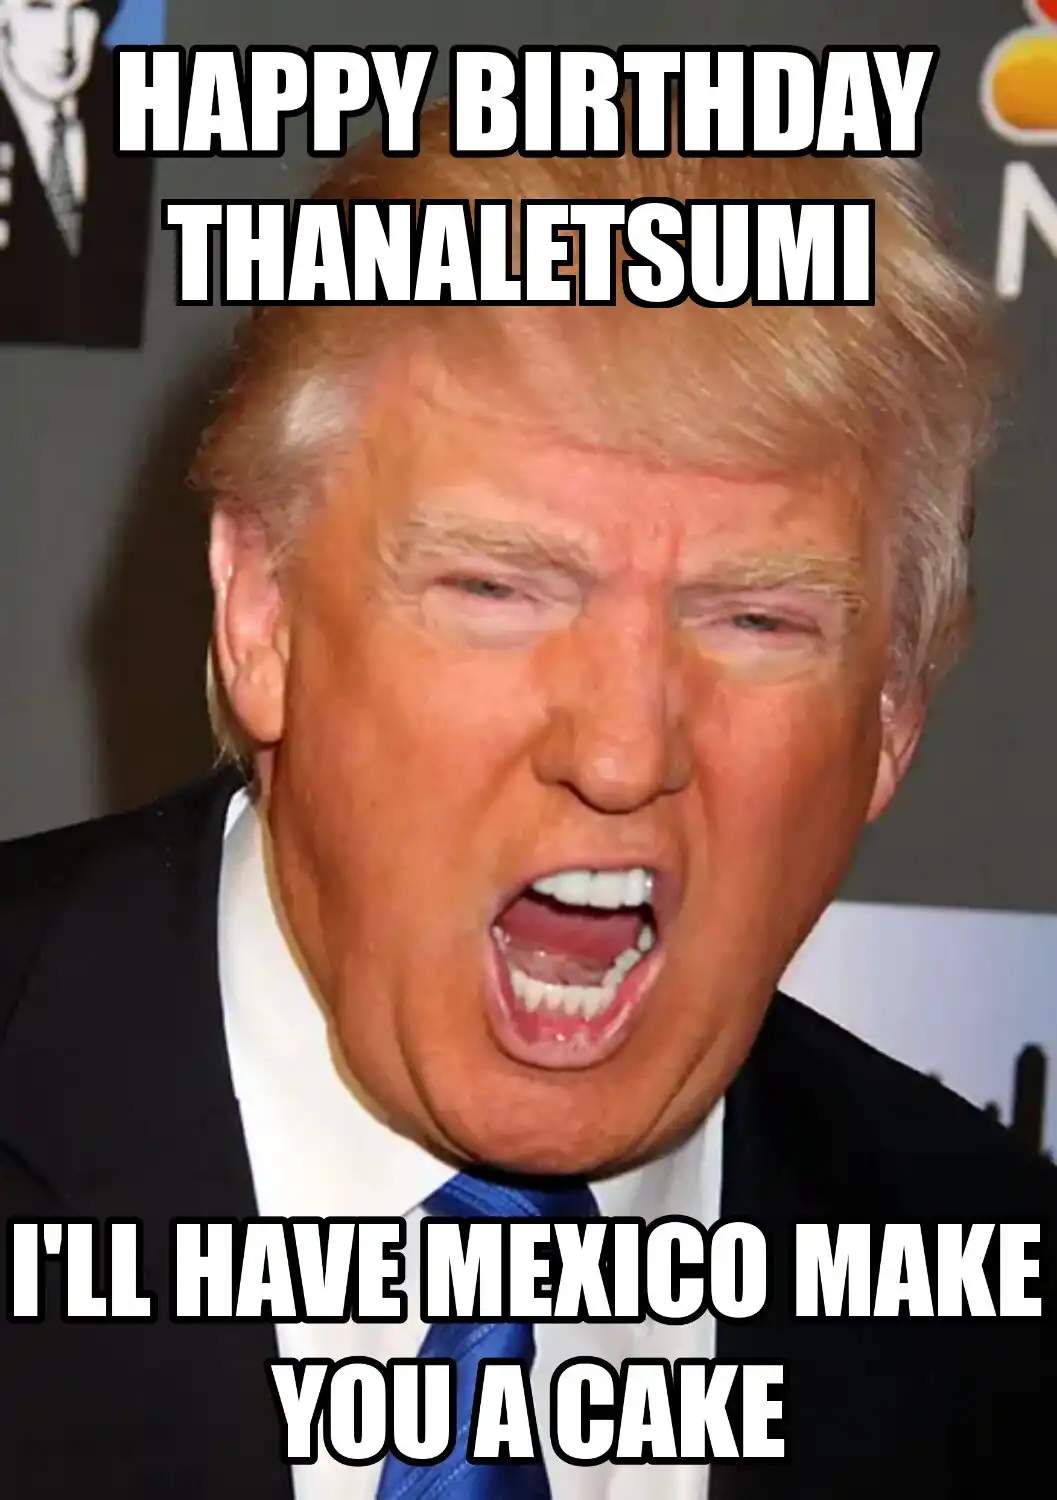 Happy Birthday Thanaletsumi Mexico Make You A Cake Meme